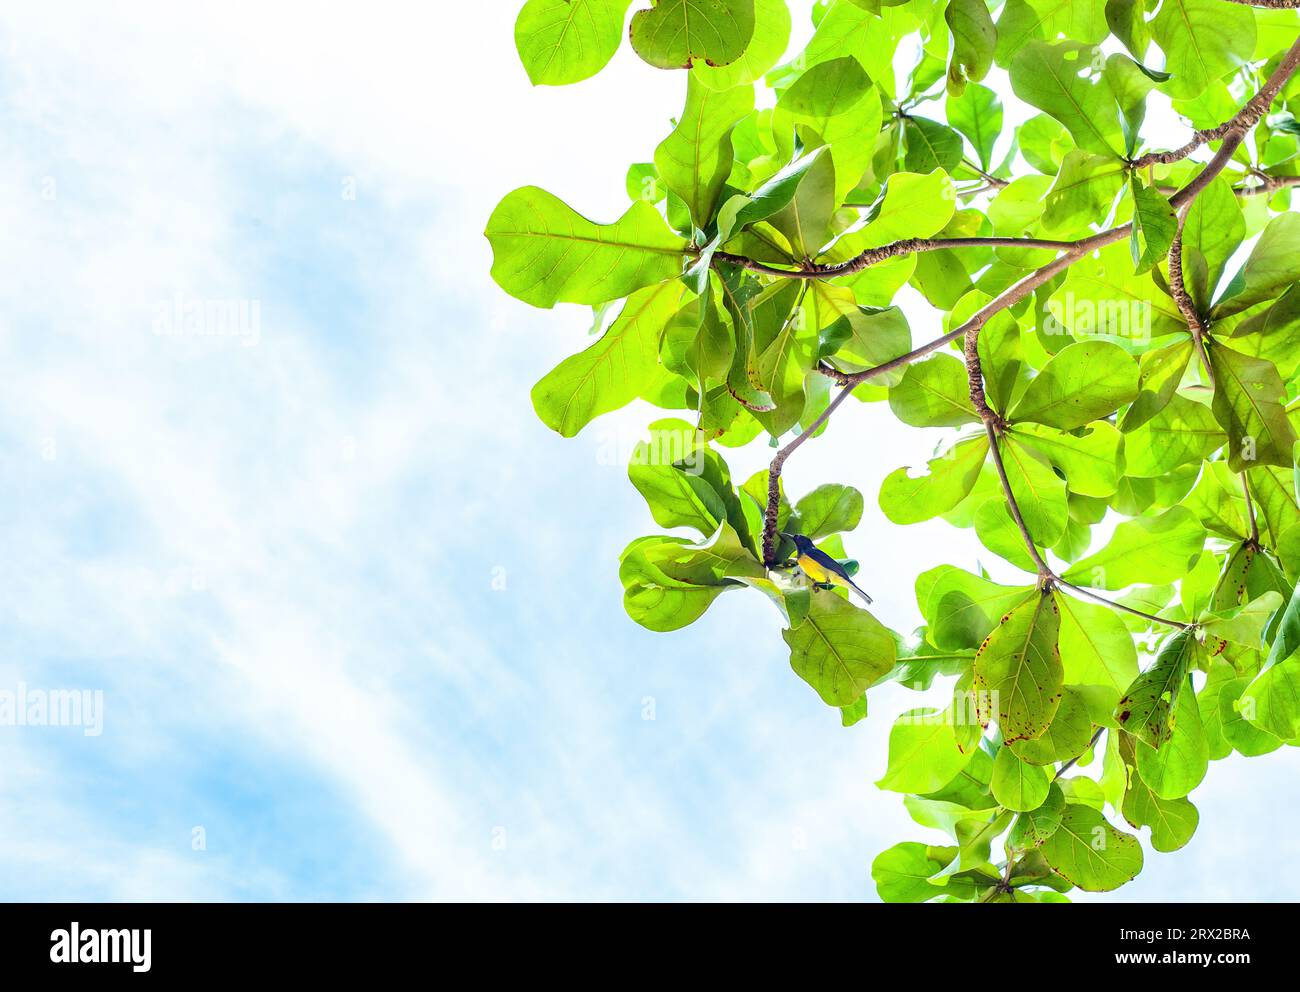 Dipterocarpus tuberculatus Roxb tree and Olive-backed sunbird in green leaves by blue sky. Red-throated Sunbird or Anthreptes rhodolaemus sitting on b Stock Photo